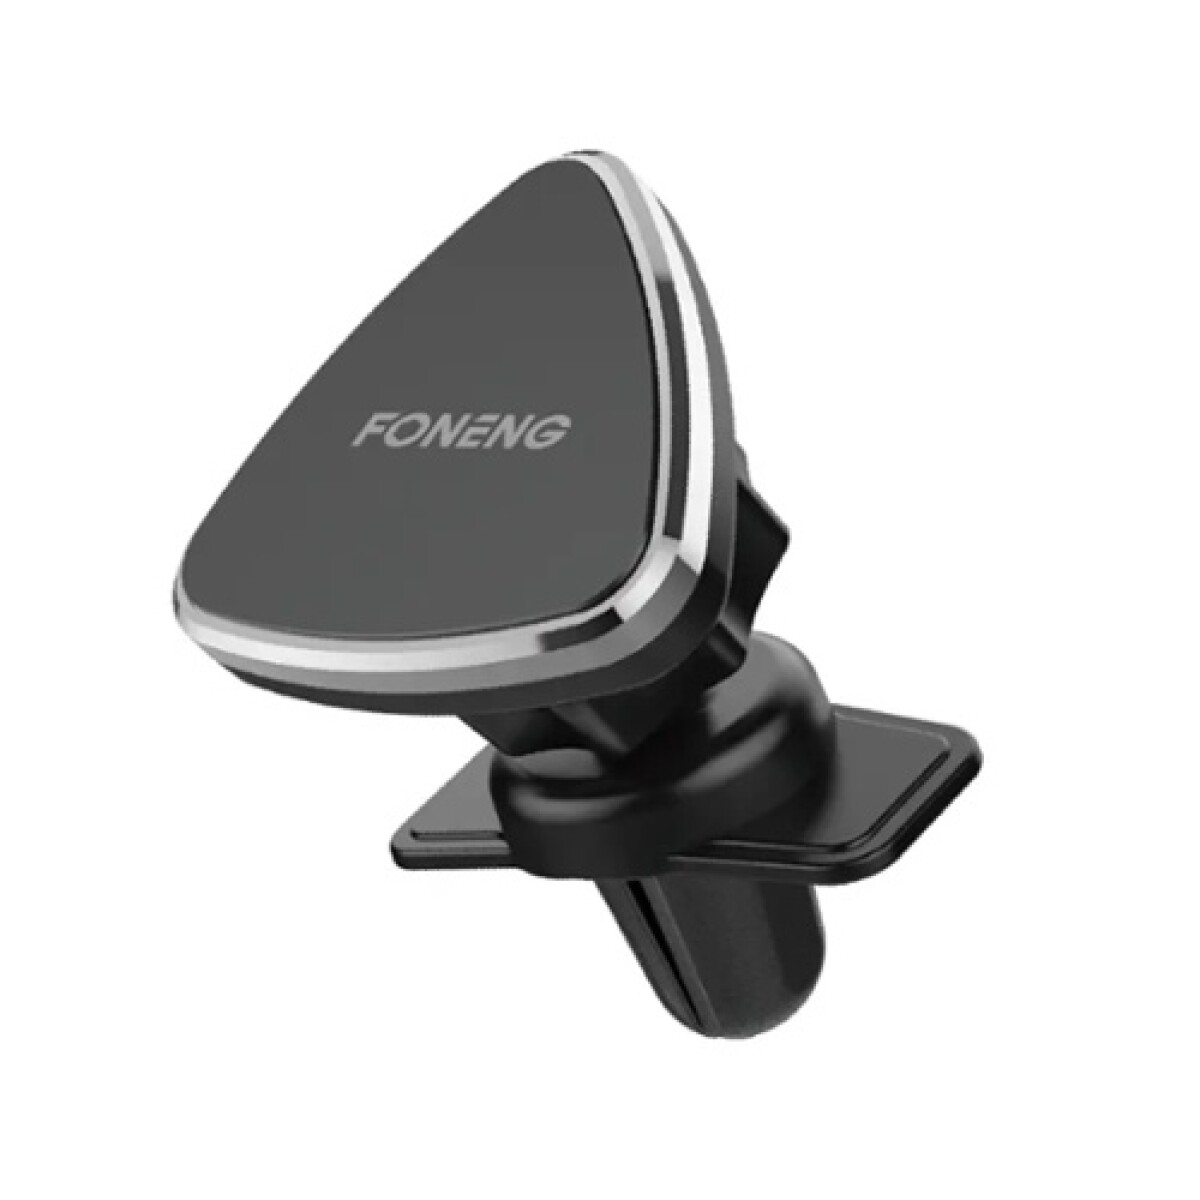 Soporte Foneng CP14 Magnético Air Vent Car Phone Holder - NEGRO 